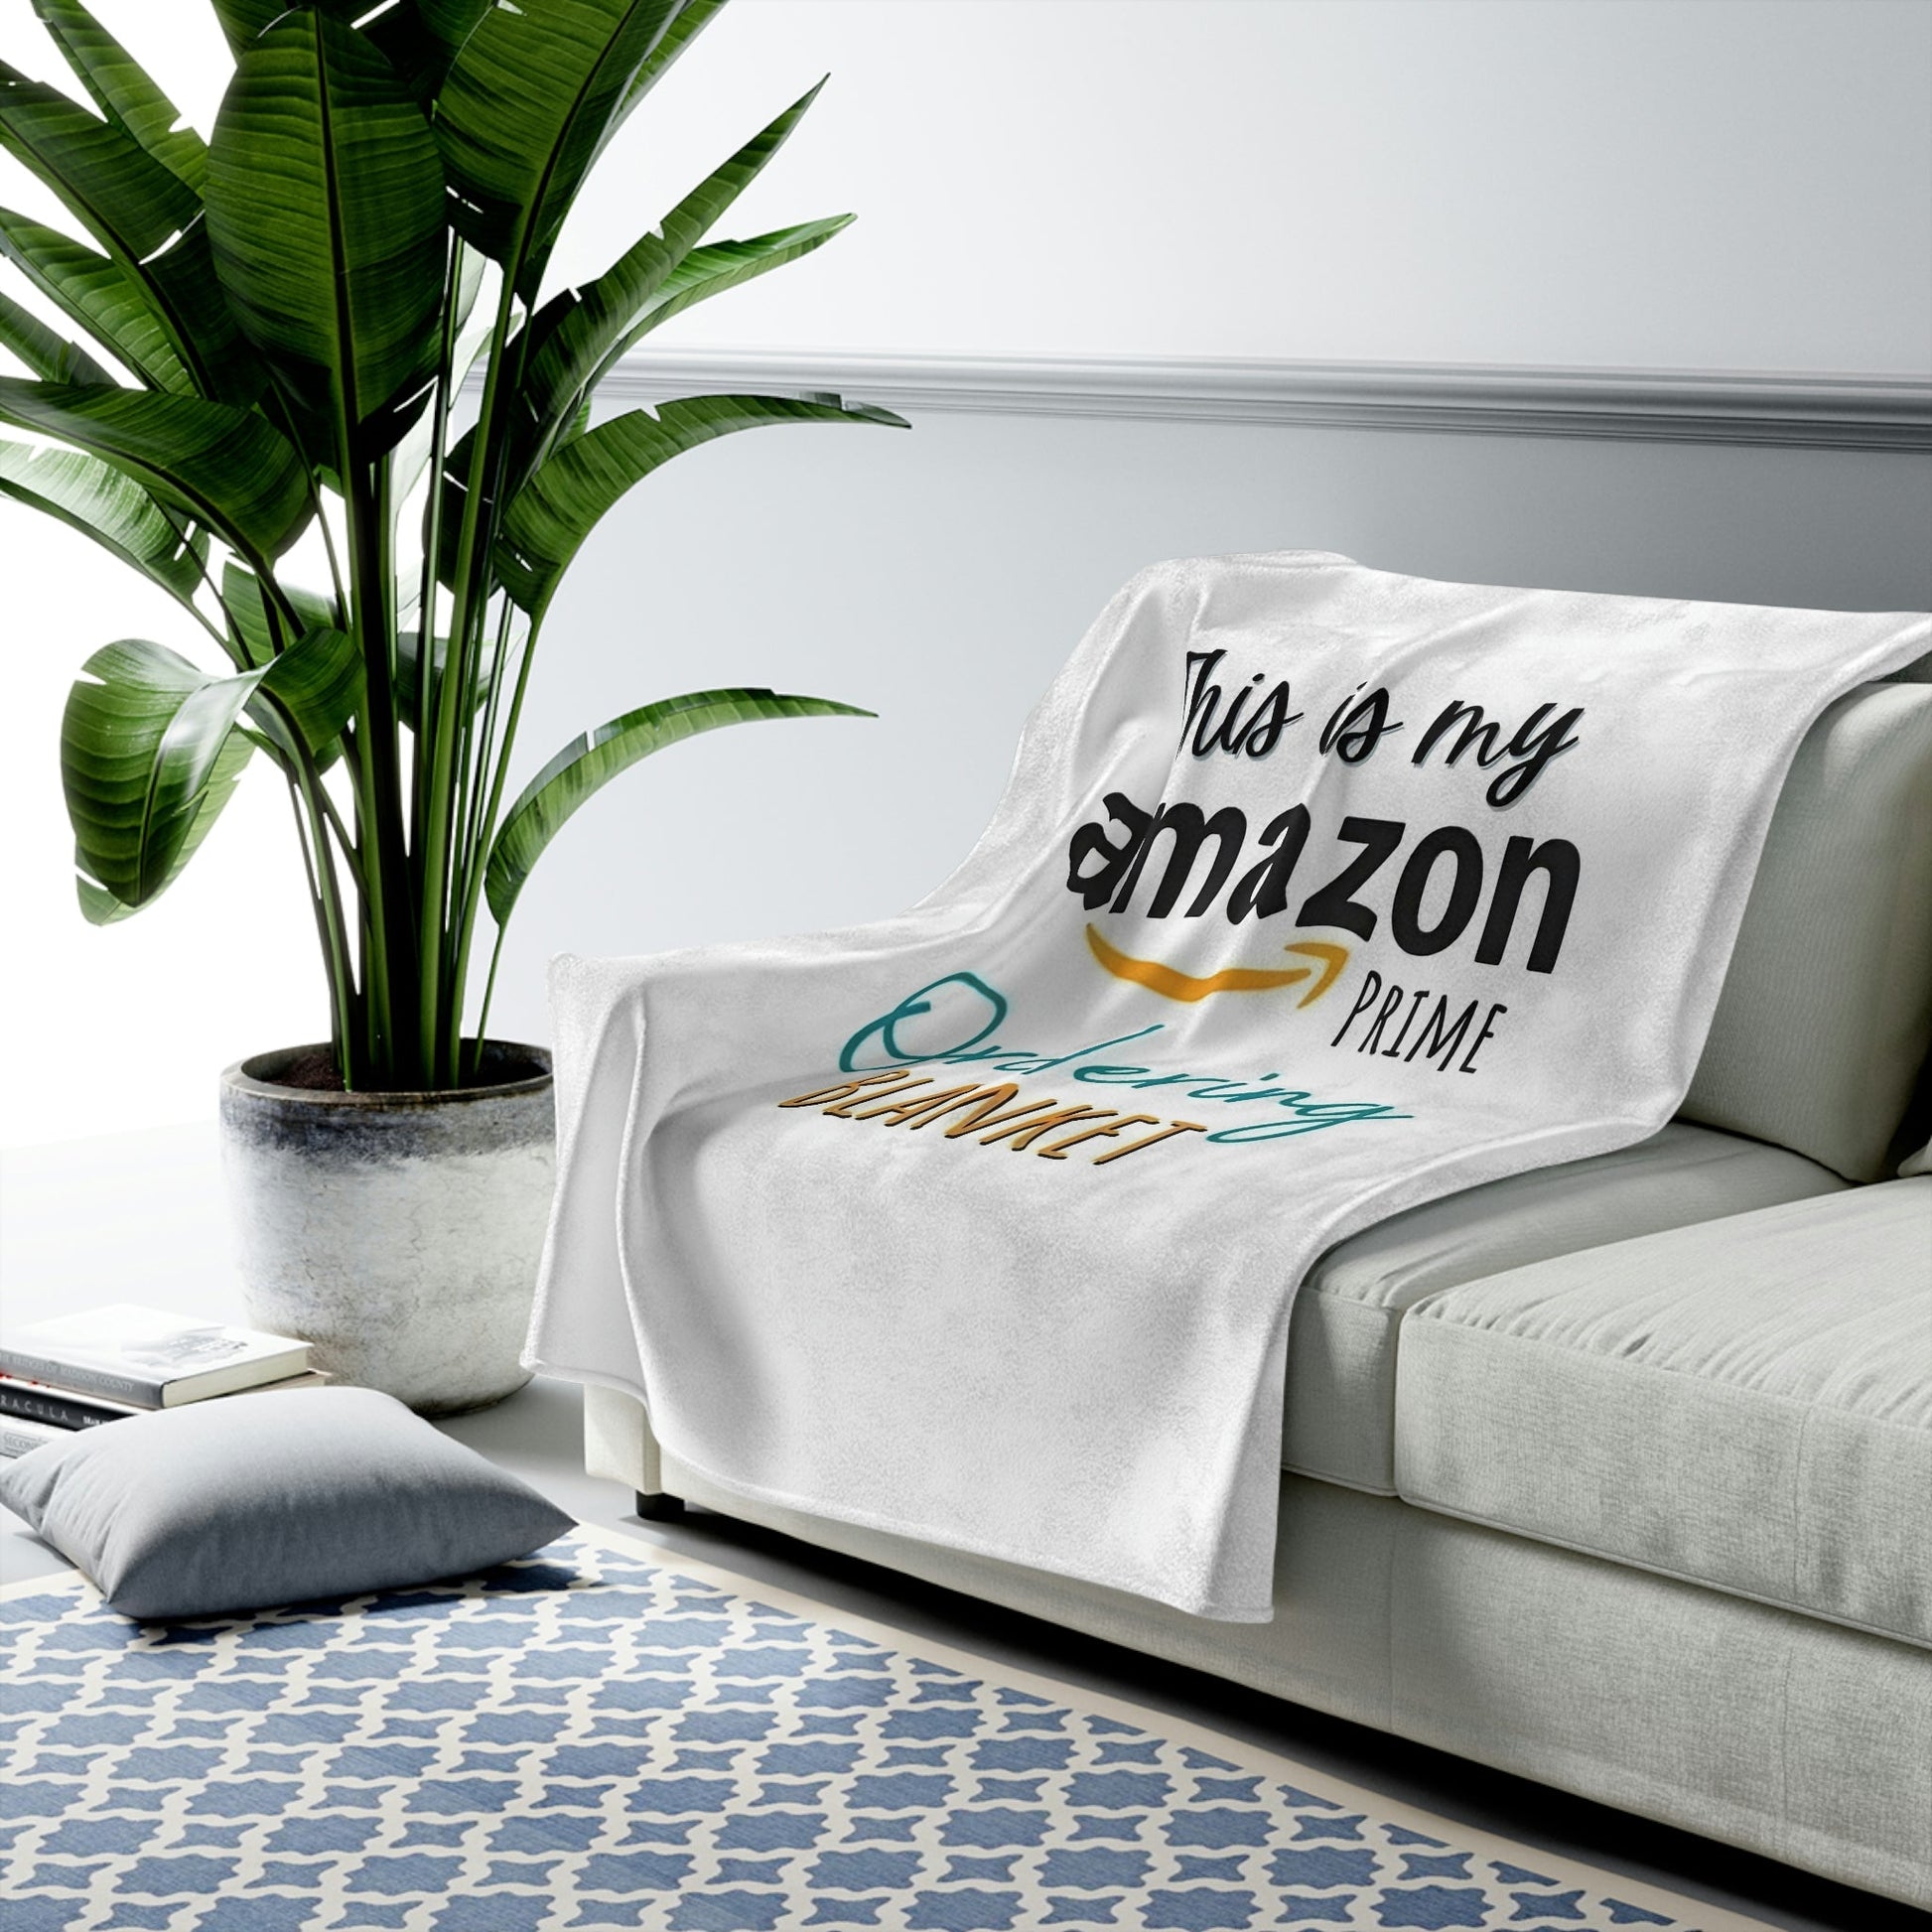 This is My Amazon Ordering Blanket Velveteen Plush Blanket - Premium blanket from Printify - Just $42.99! Shop now at giftmeabreak